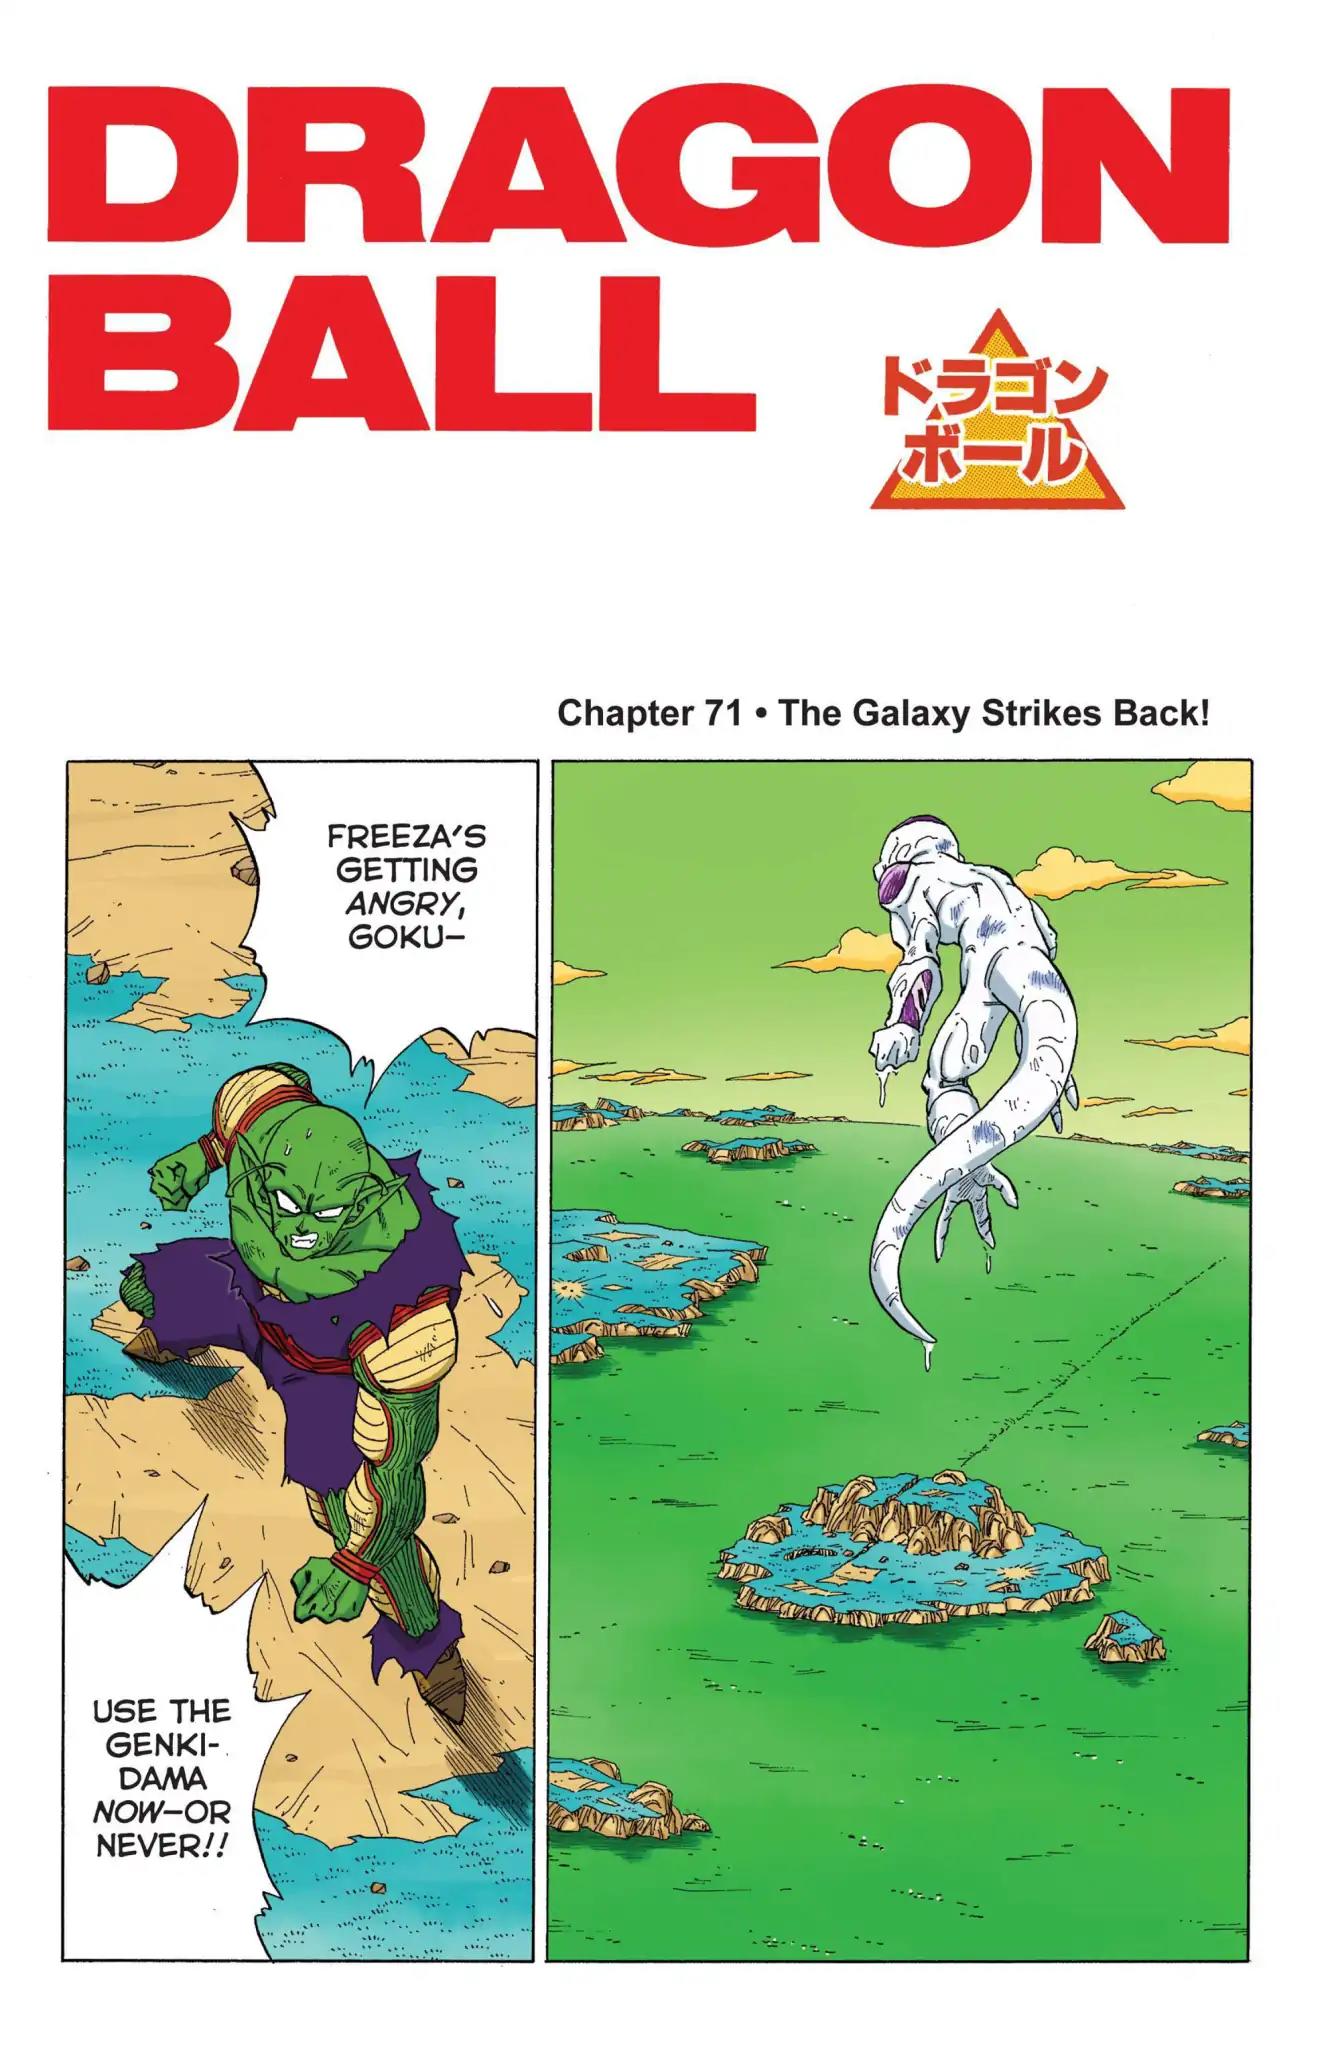 Dragon Ball Full Color Freeza Arc Vol.5 Chapter 071: